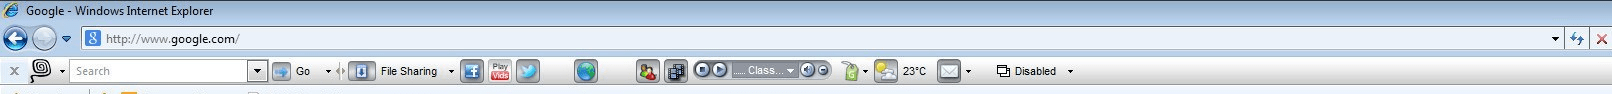 Online Sharing Toolbar Screenshot 1